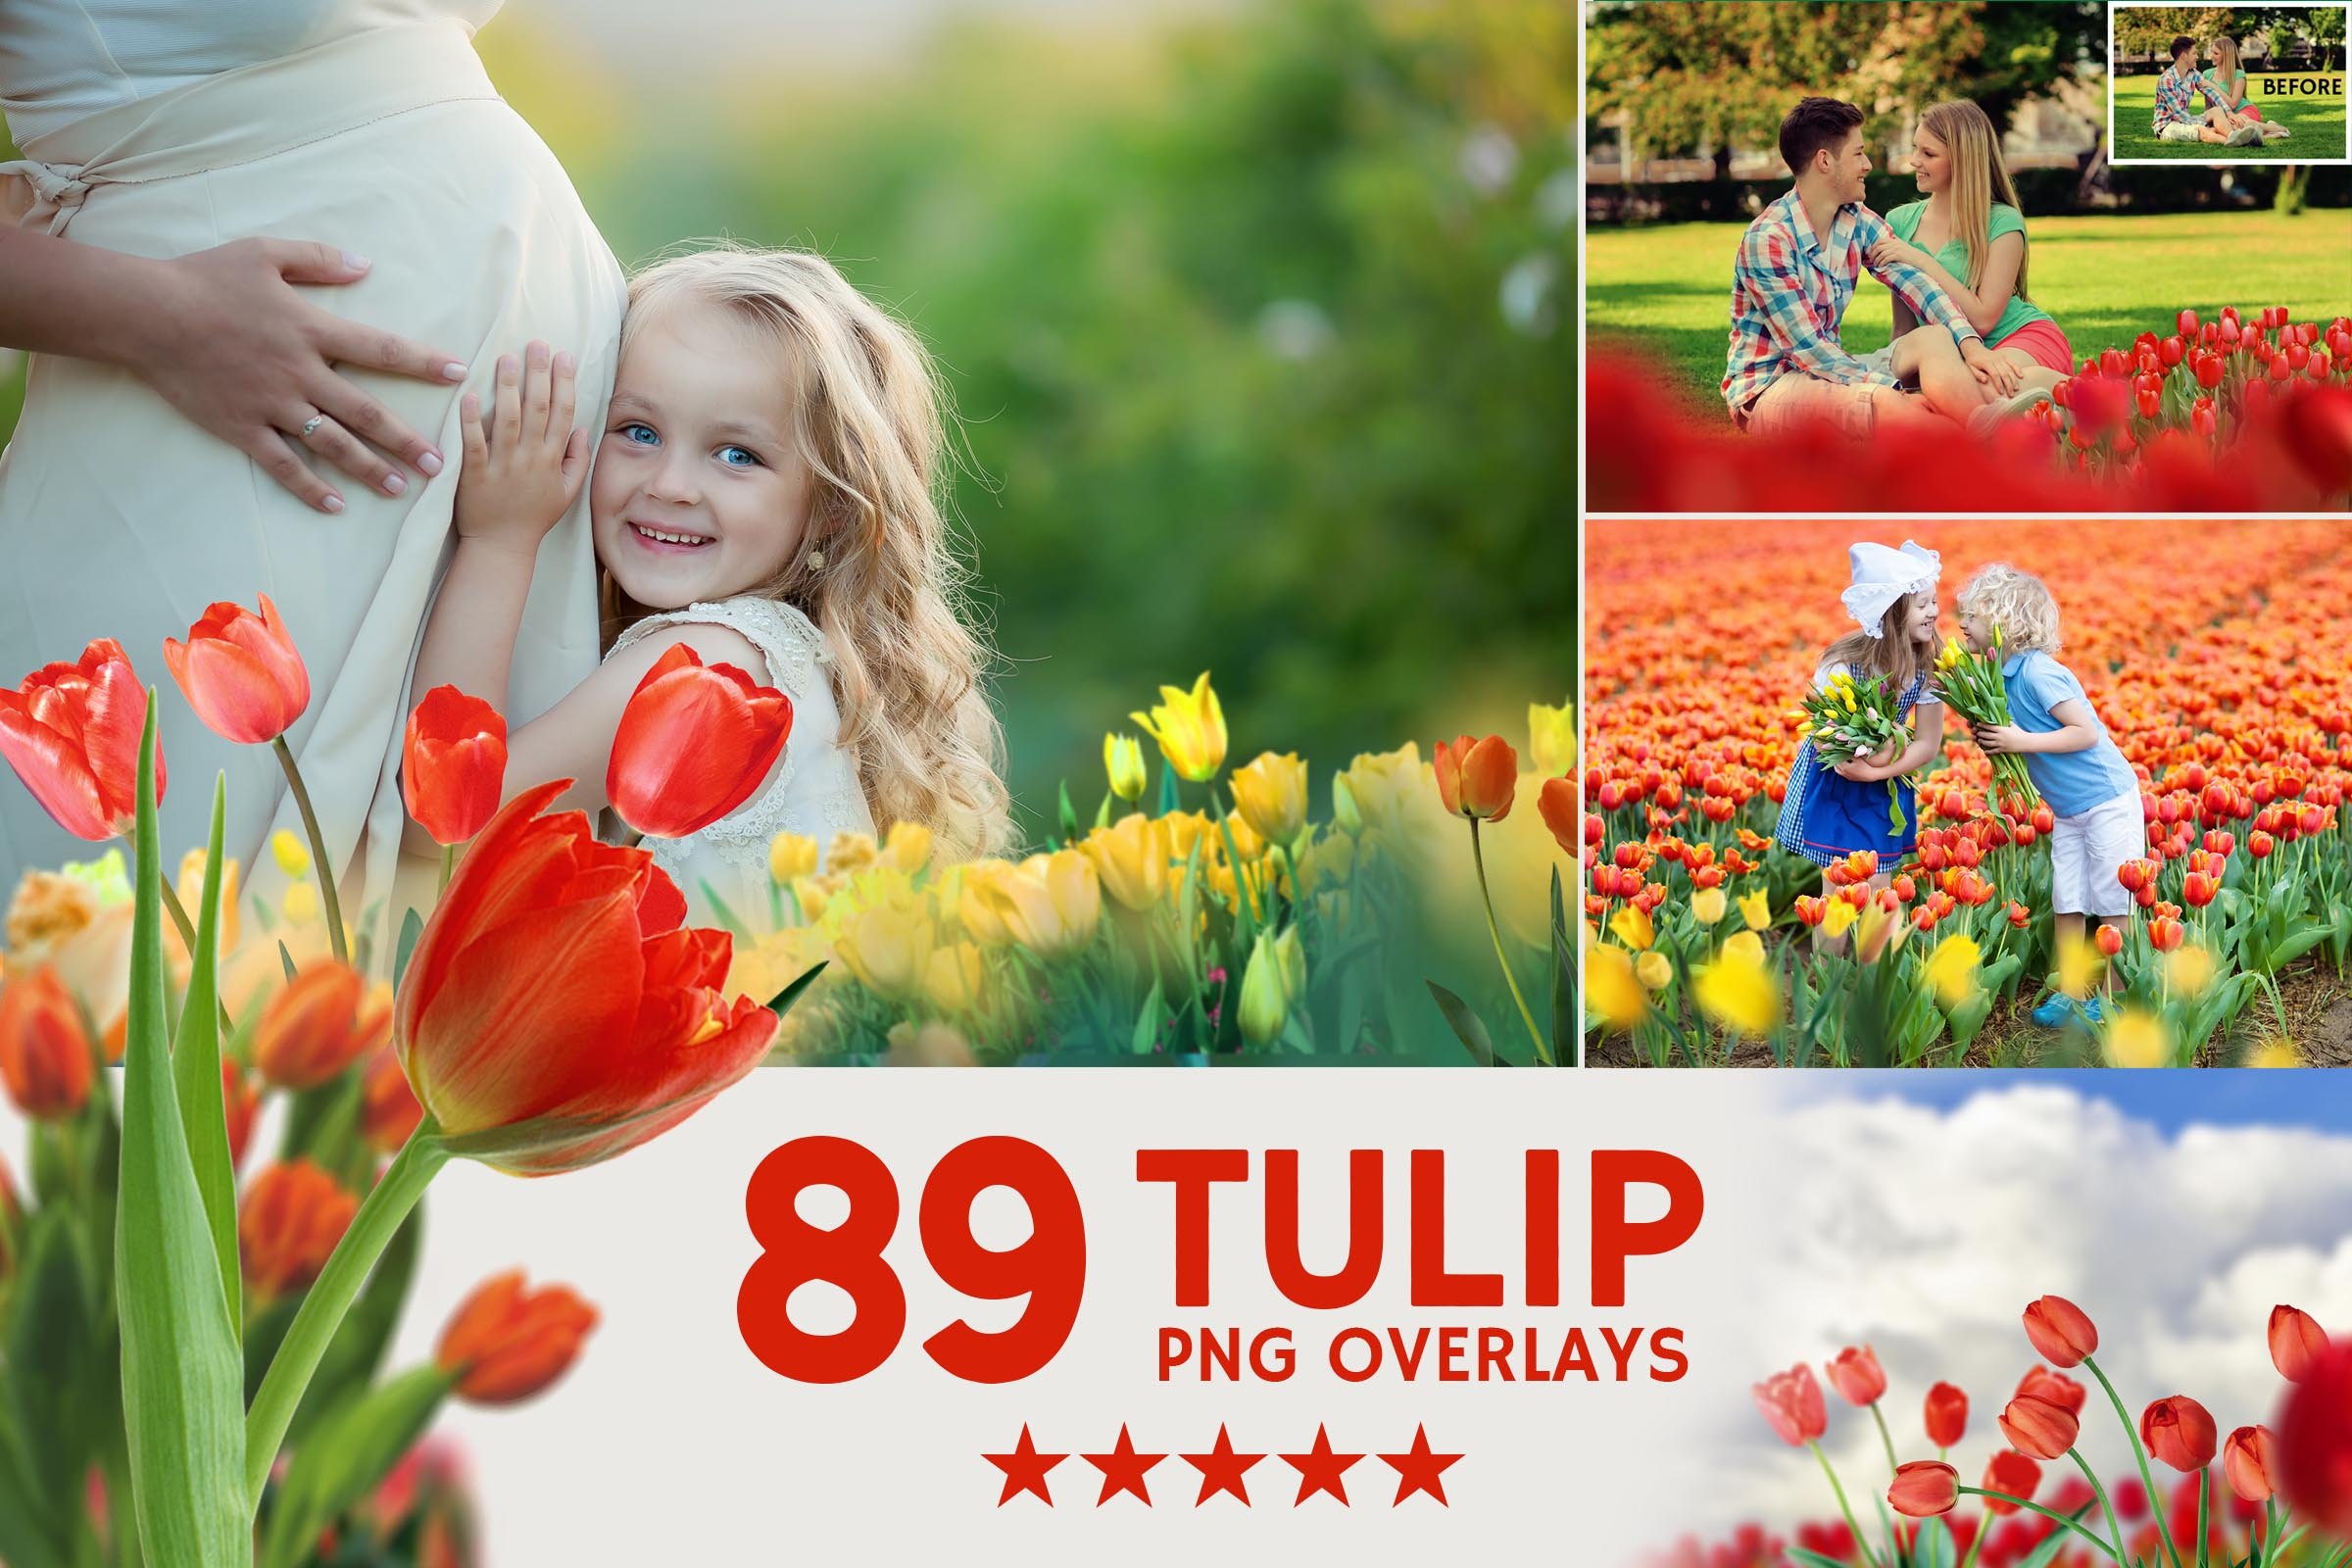 042. tulips 505